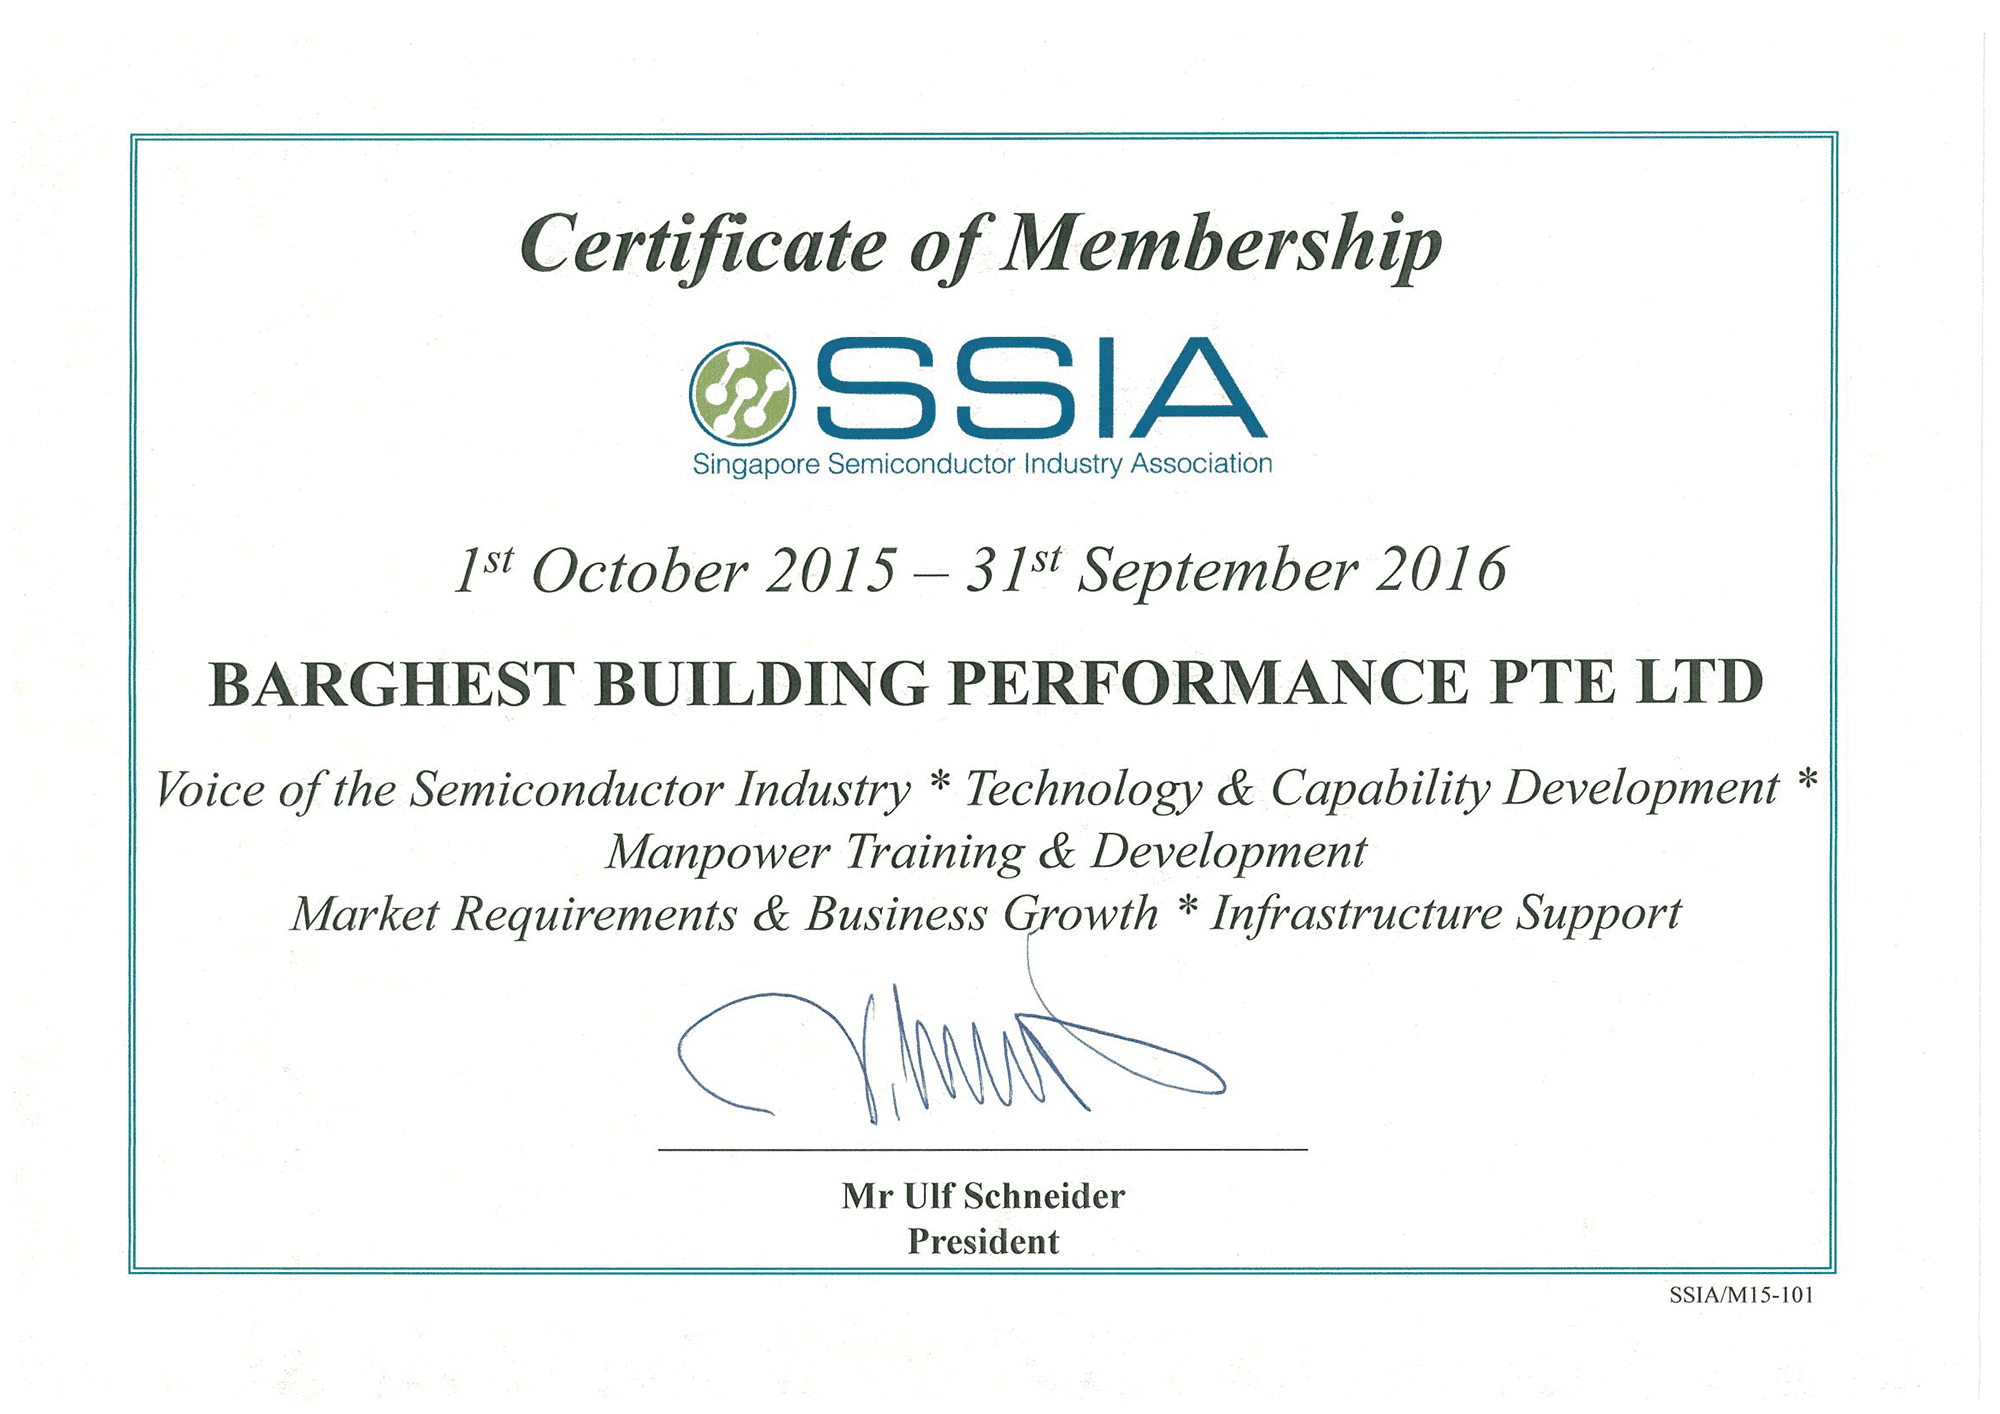 SSIA membership